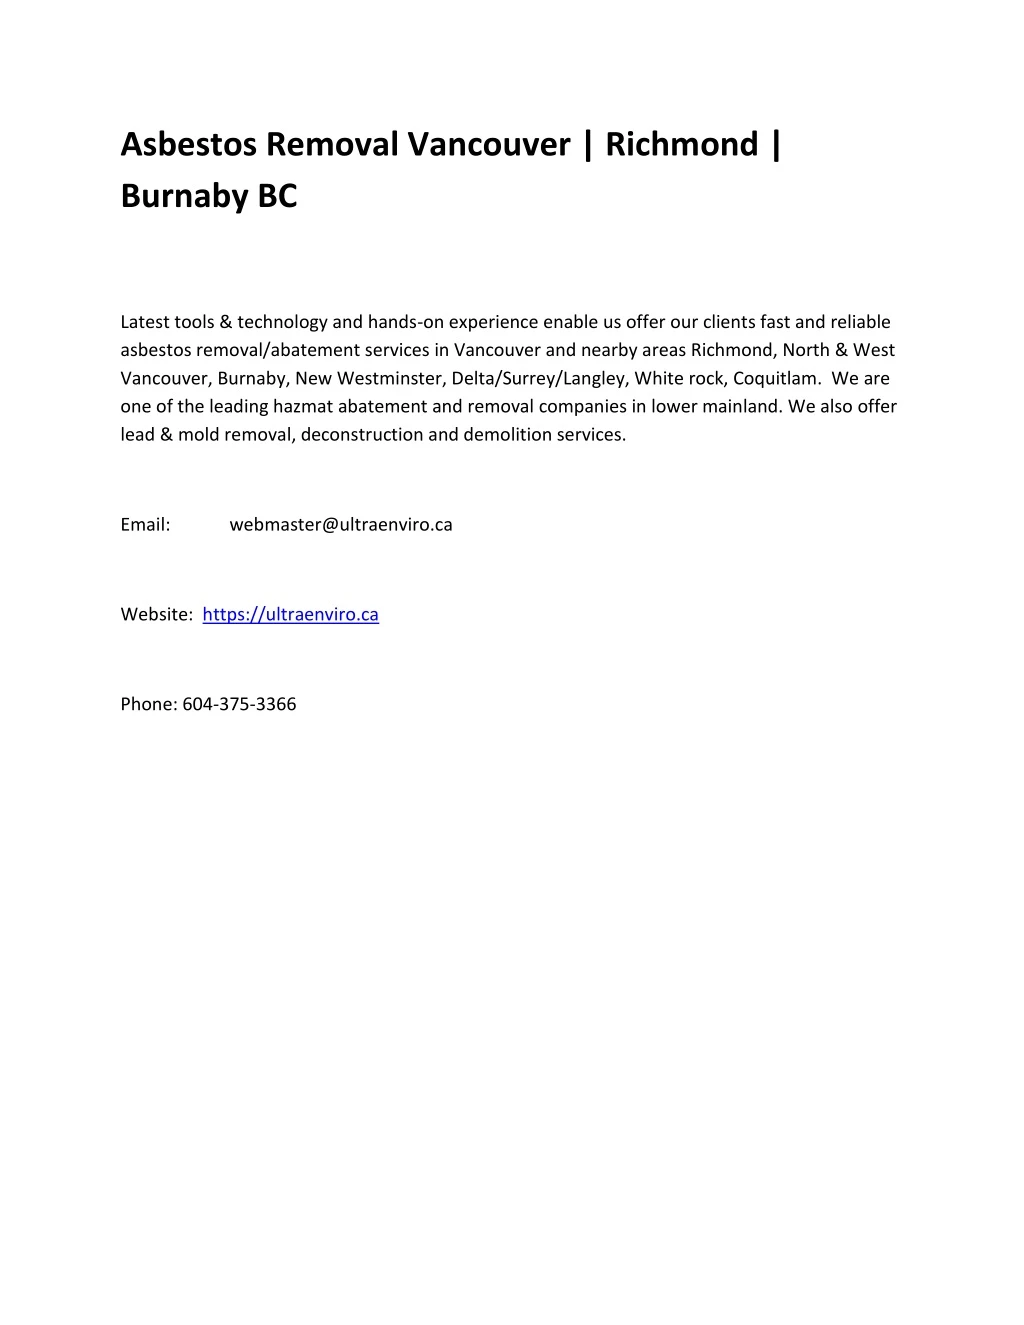 asbestos removal vancouver richmond burnaby bc